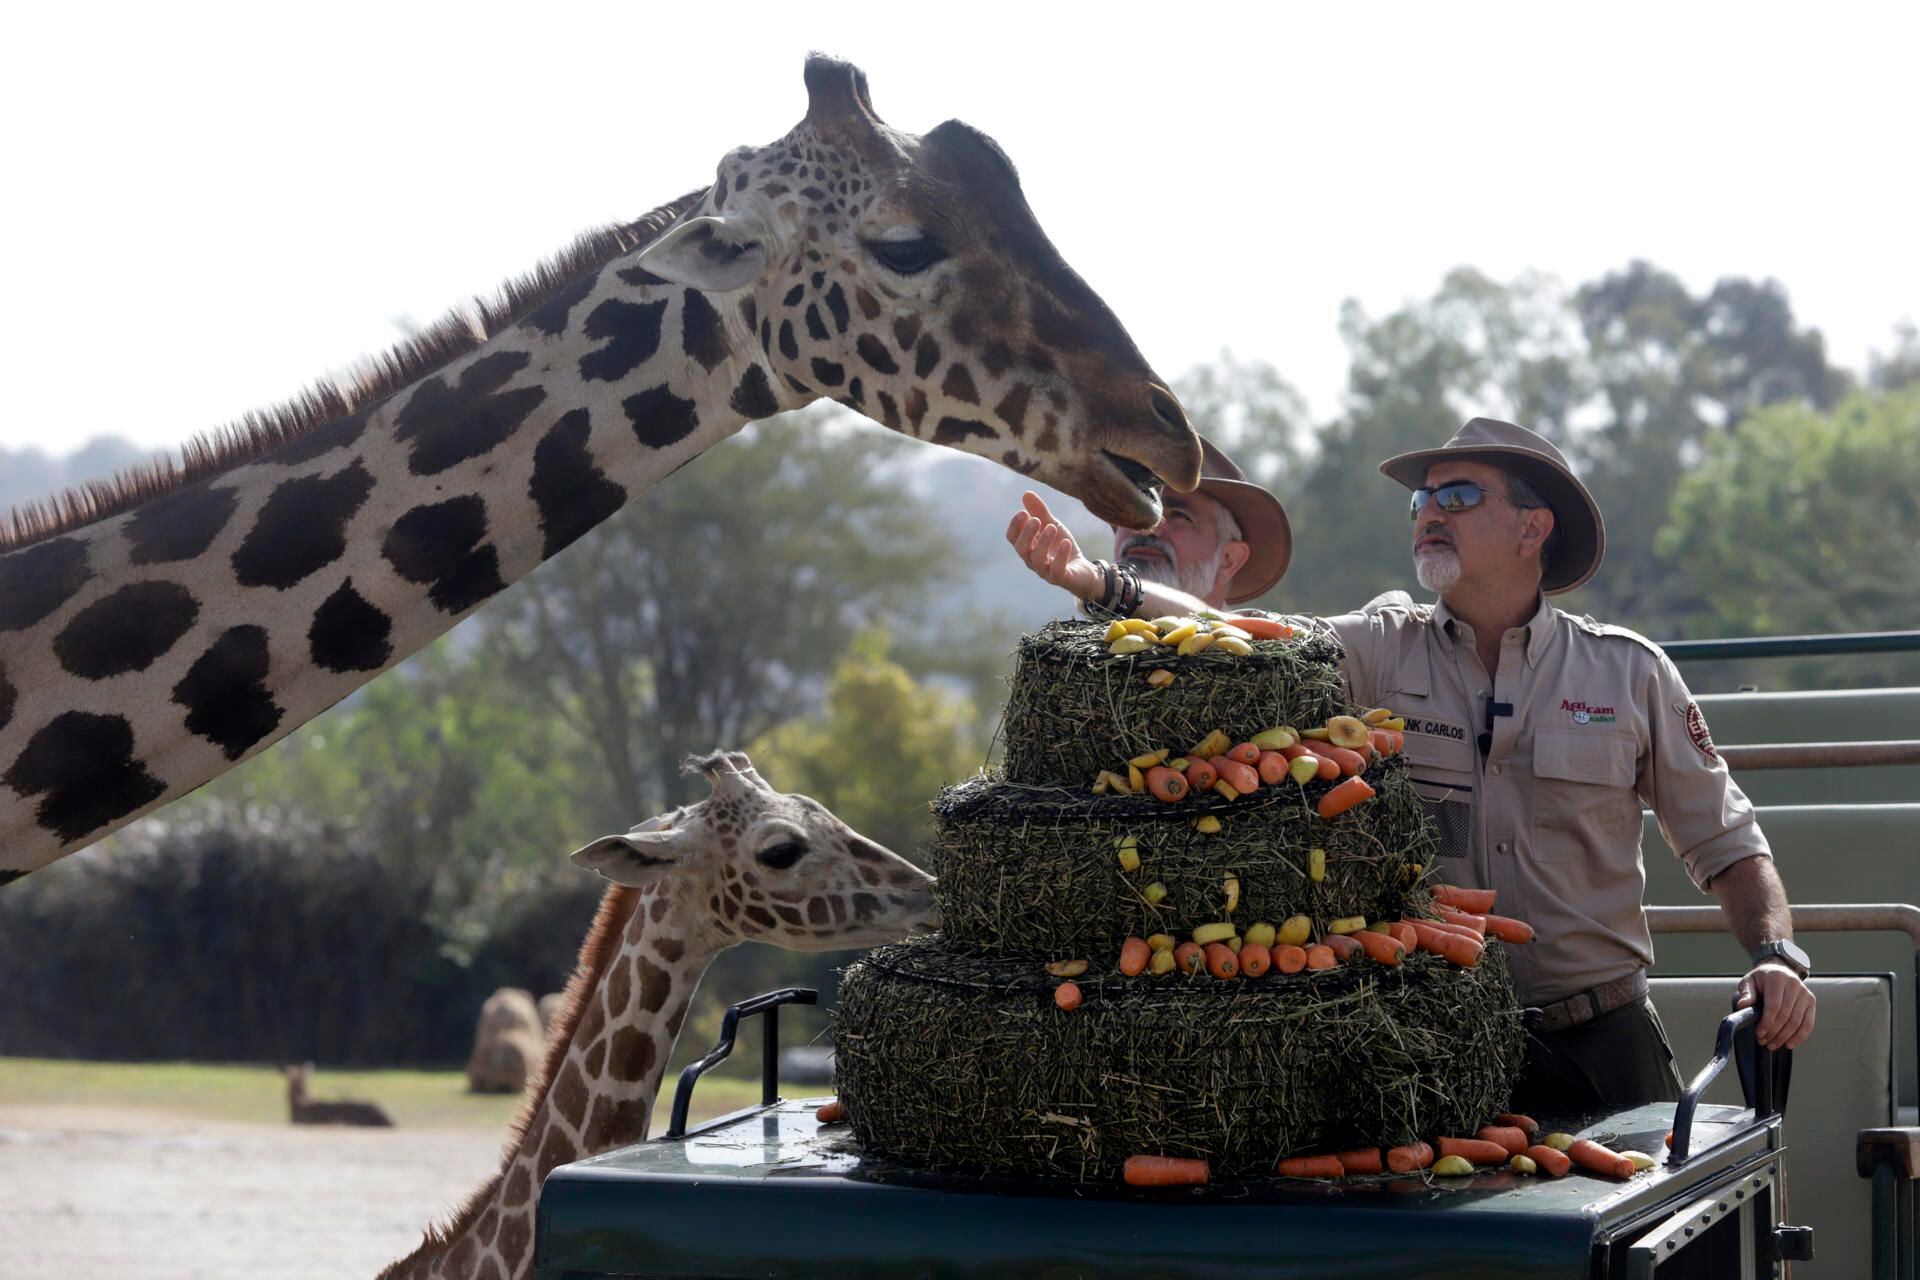 FOTOGALERÍA: Jirafa Benito se integra con las jirafas de Africam Safari